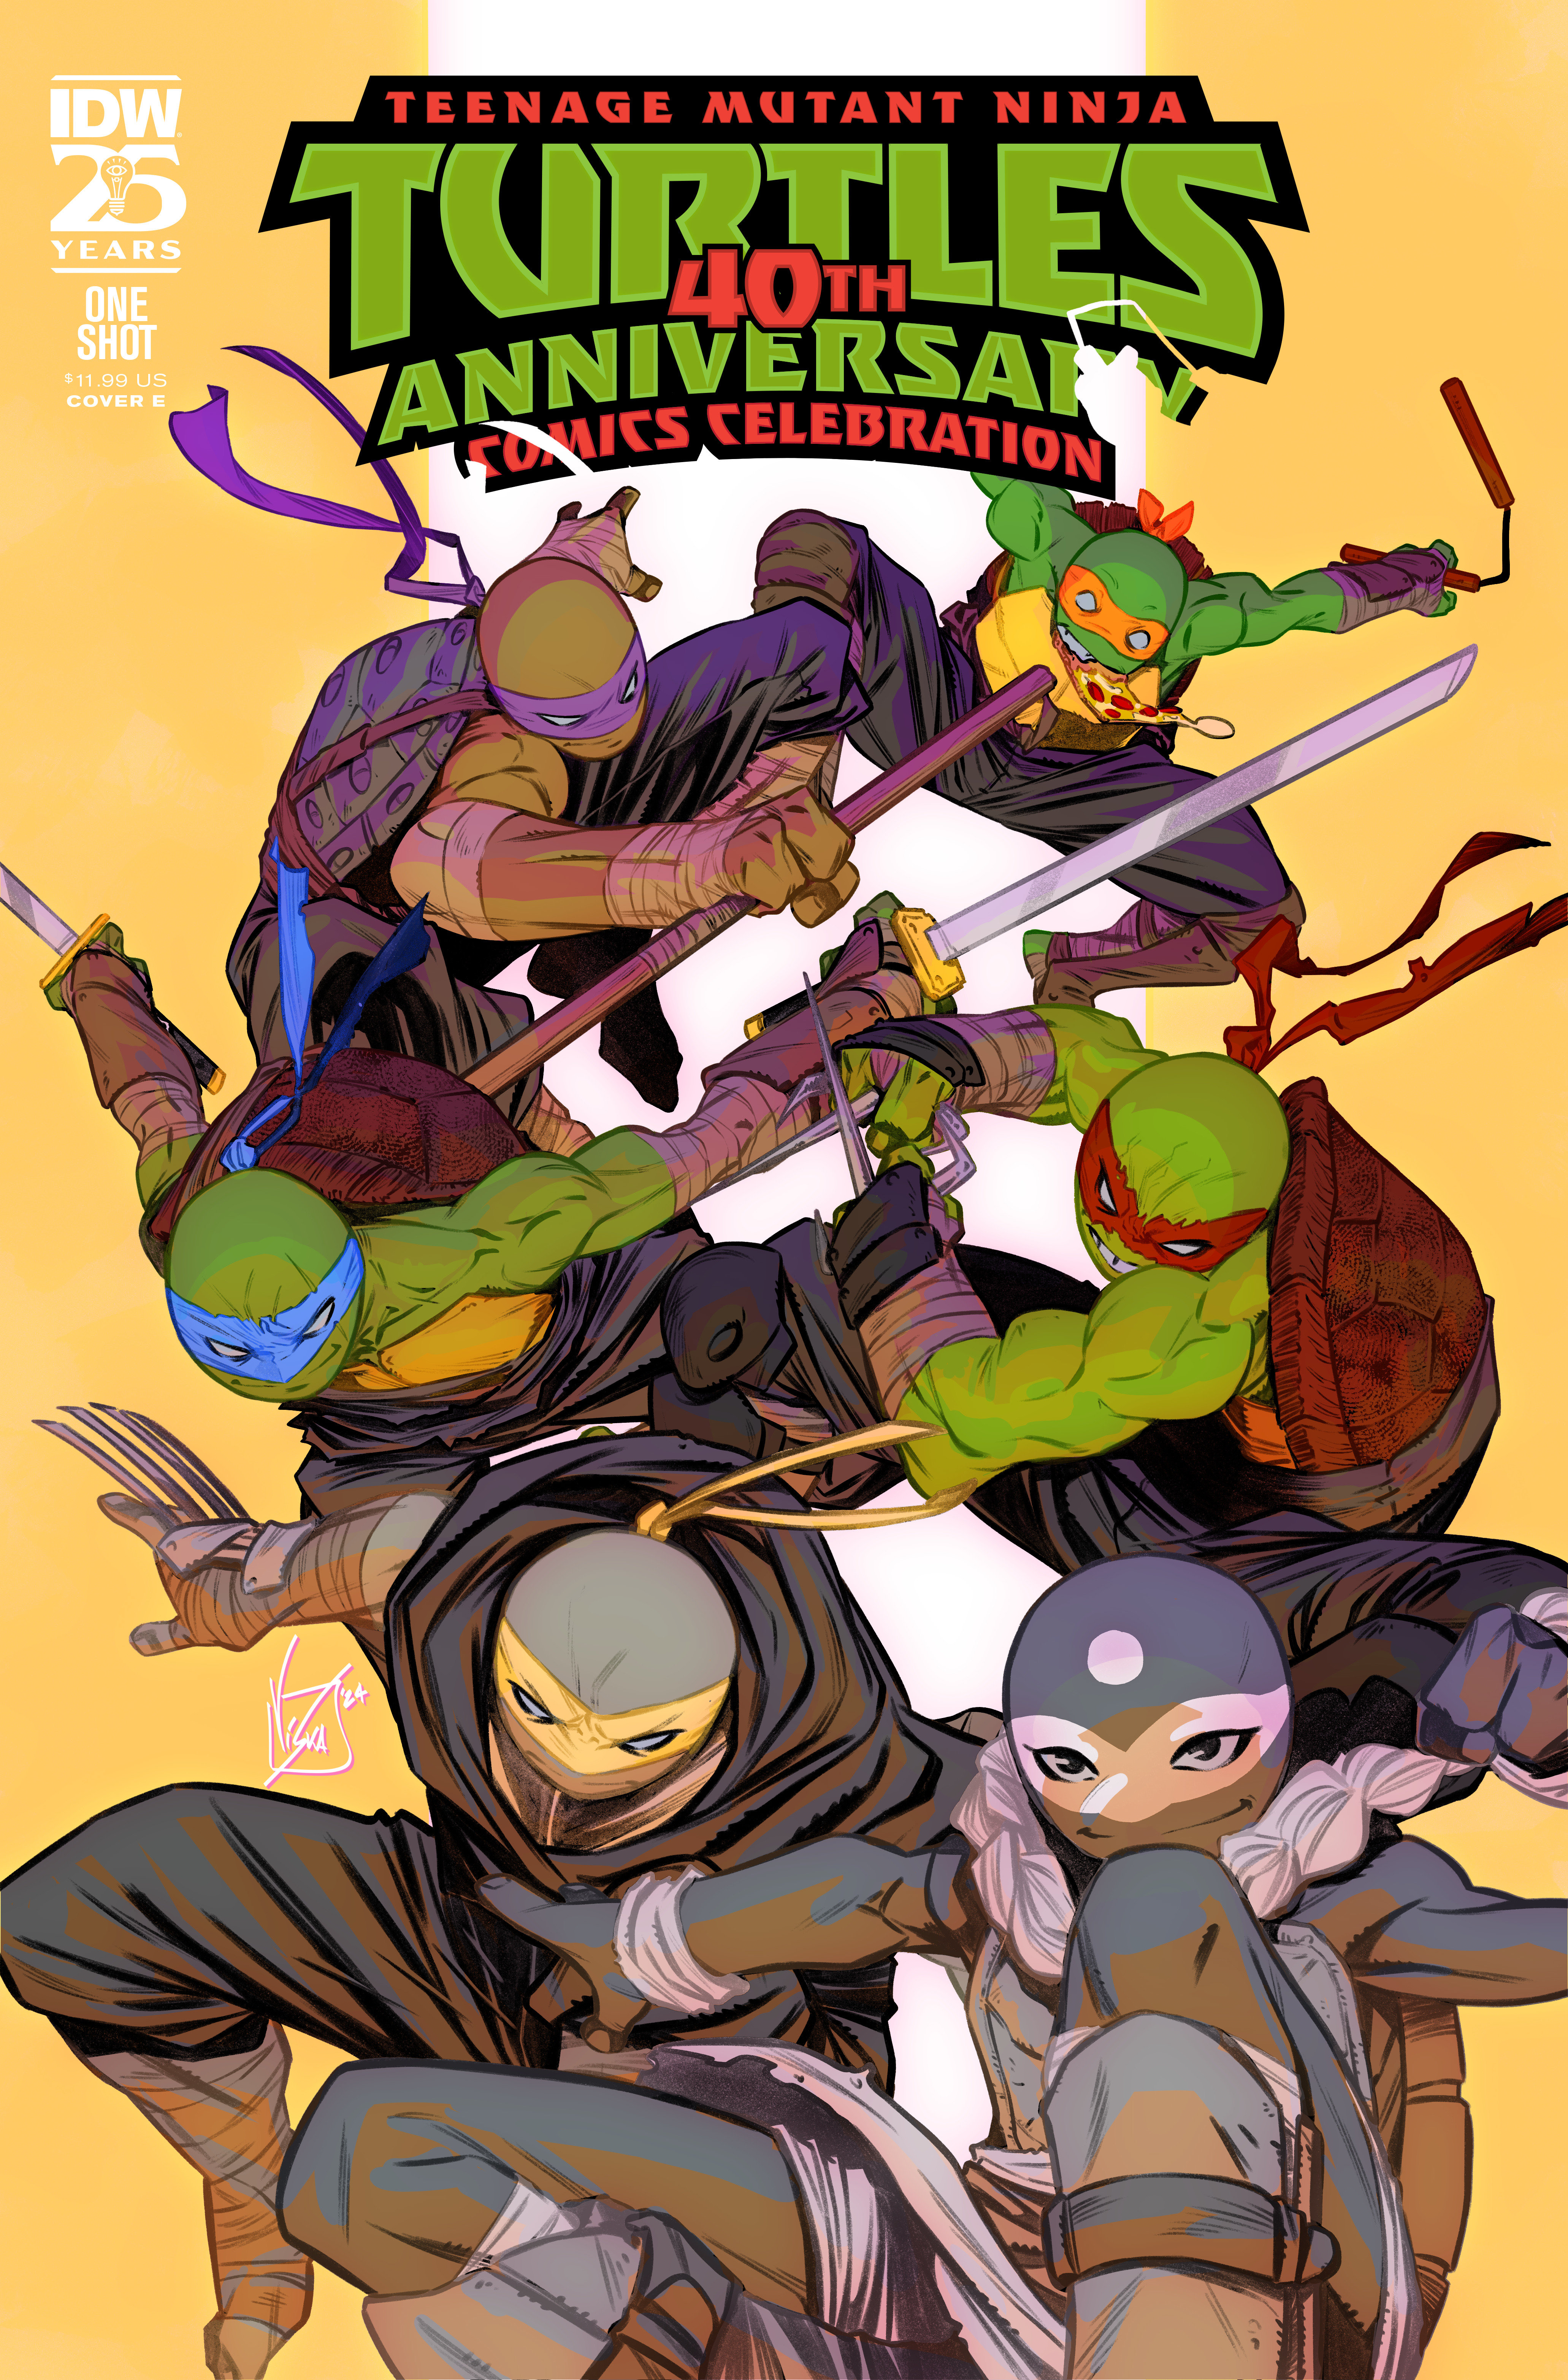 Teenage Mutant Ninja Turtles 40th Anniversary Comics Celebration Cover E Federici